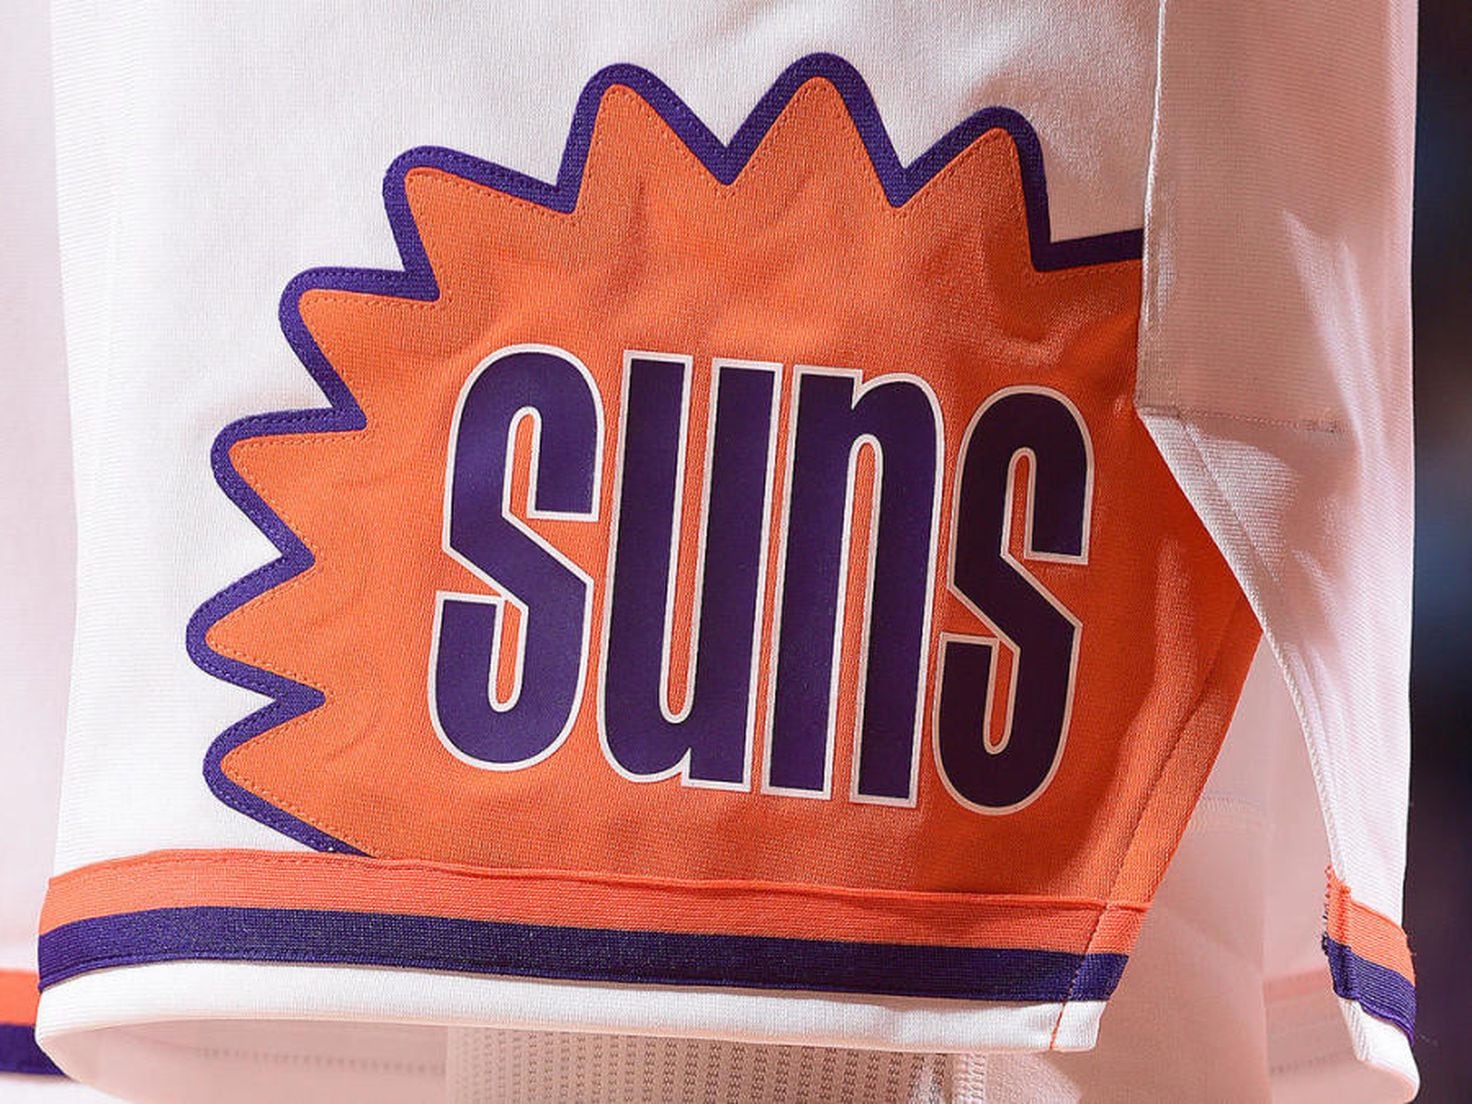 PayPal, Suns' jersey patch sponsor, won't renew if Robert Sarver remains